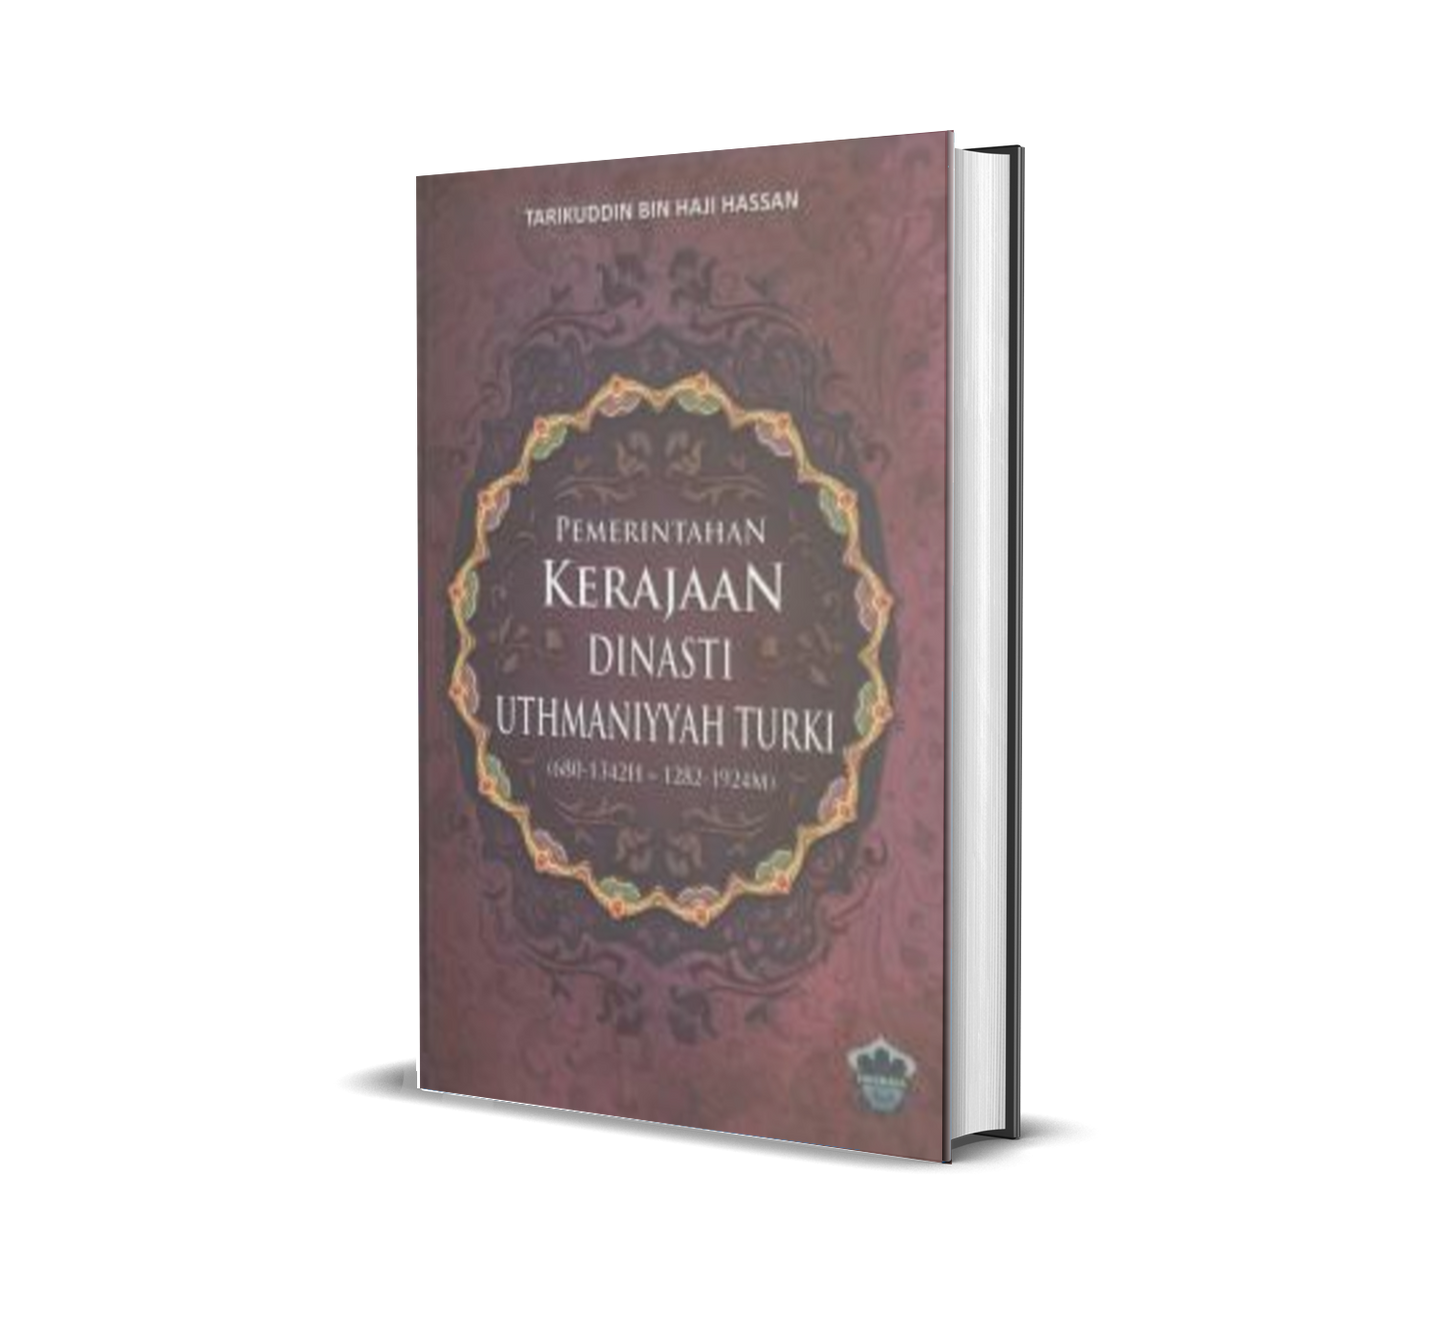 Permerintahan Kerajaan Dinasti Uthmaniyyah Turki (H/C)